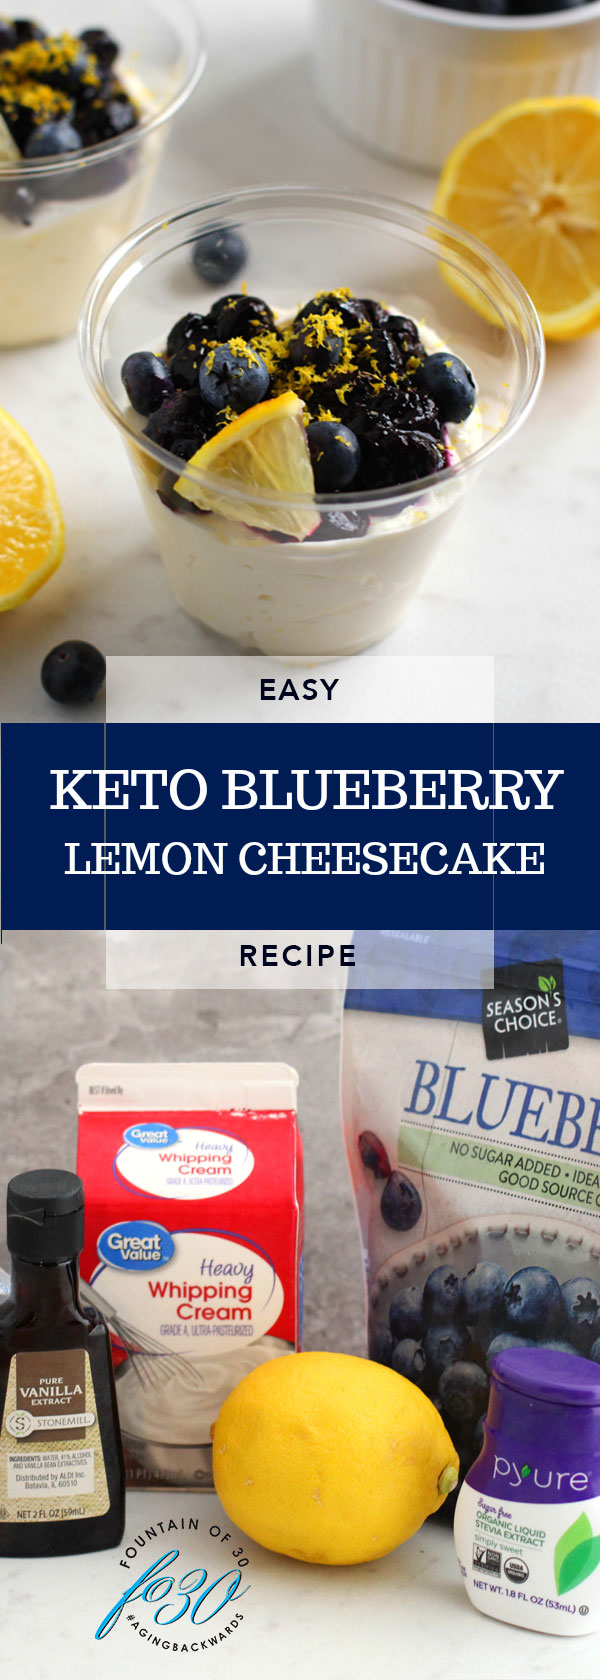 keto blueberry lemon cheesecake recipe